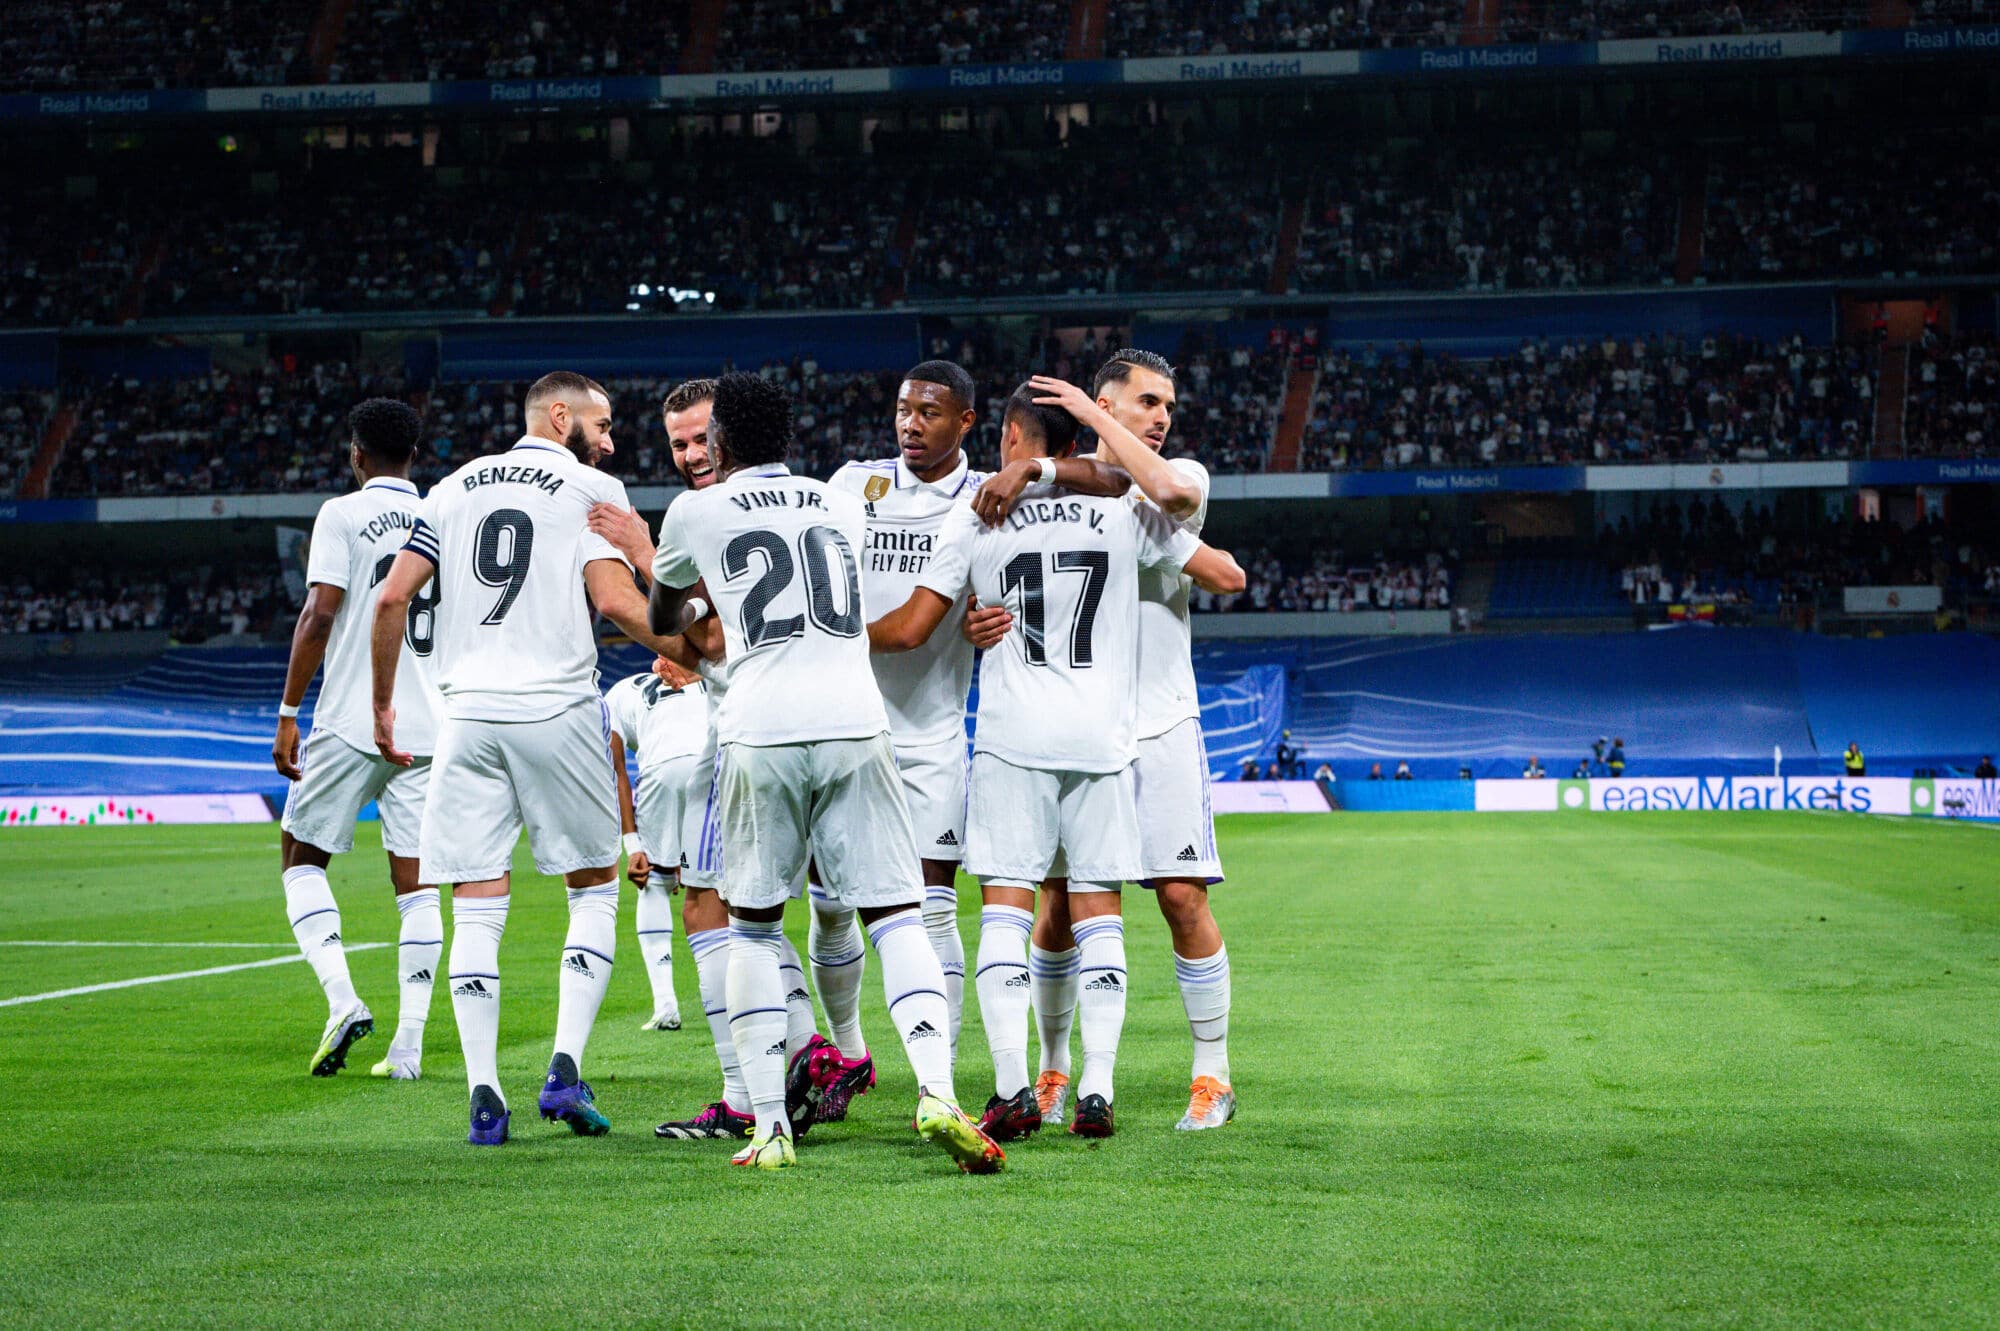 Real Madrid – Almeria : Les compositions officielles sont là